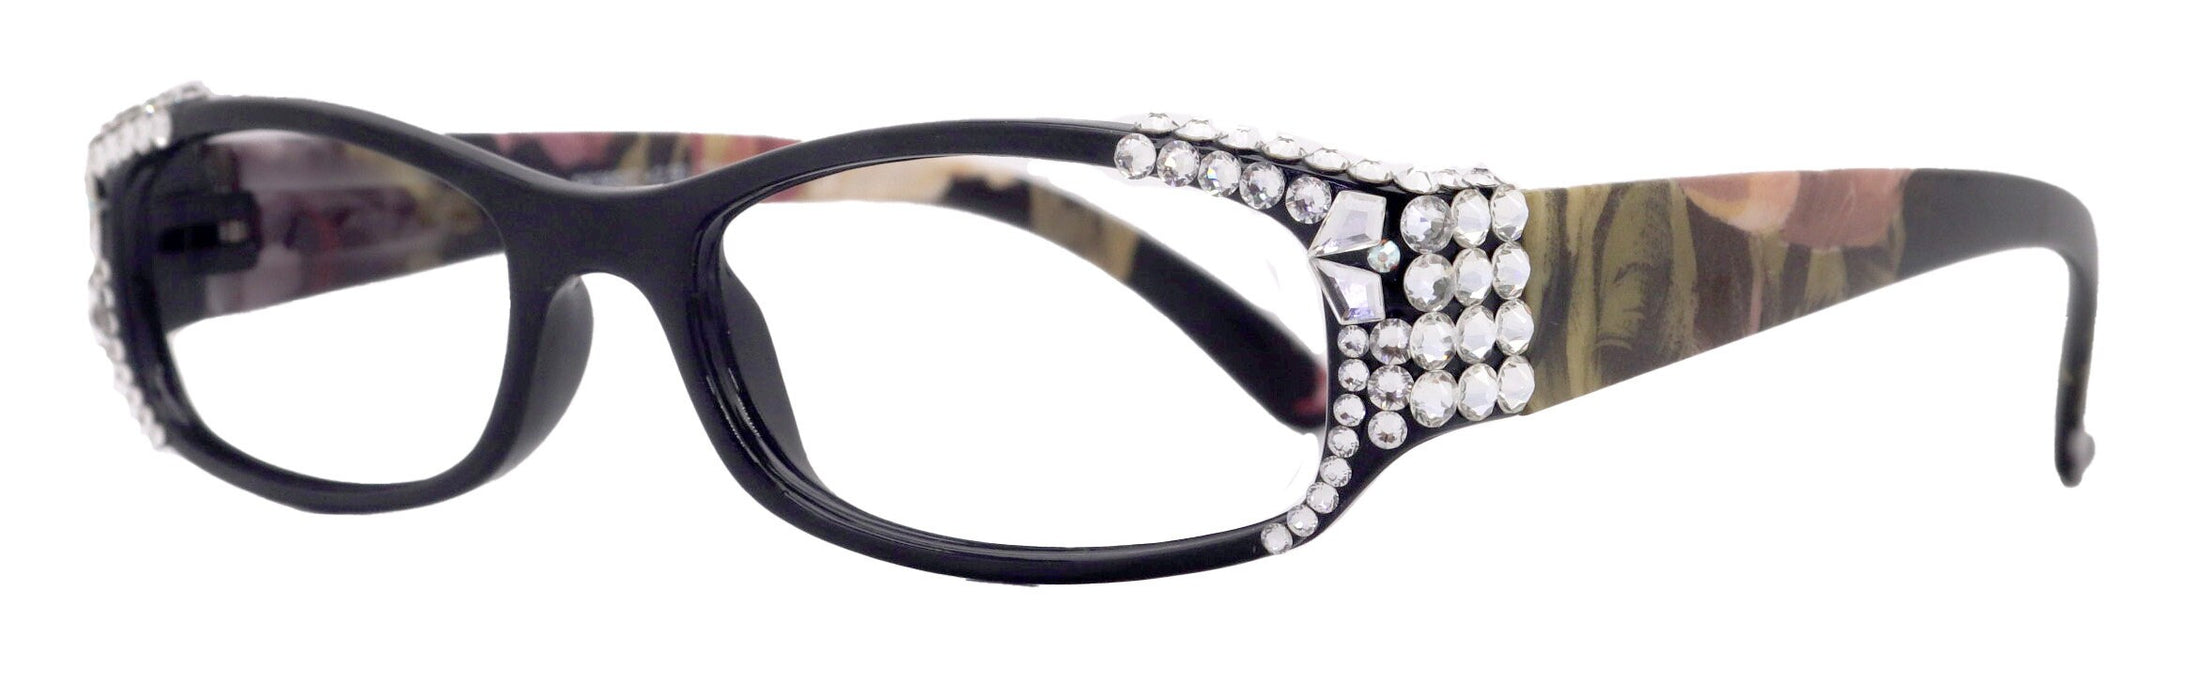 Rosie Bling Reading Glasses Women W (Aurora Borealis) Genuine European Crystals (Black) NY Fifth Avenue